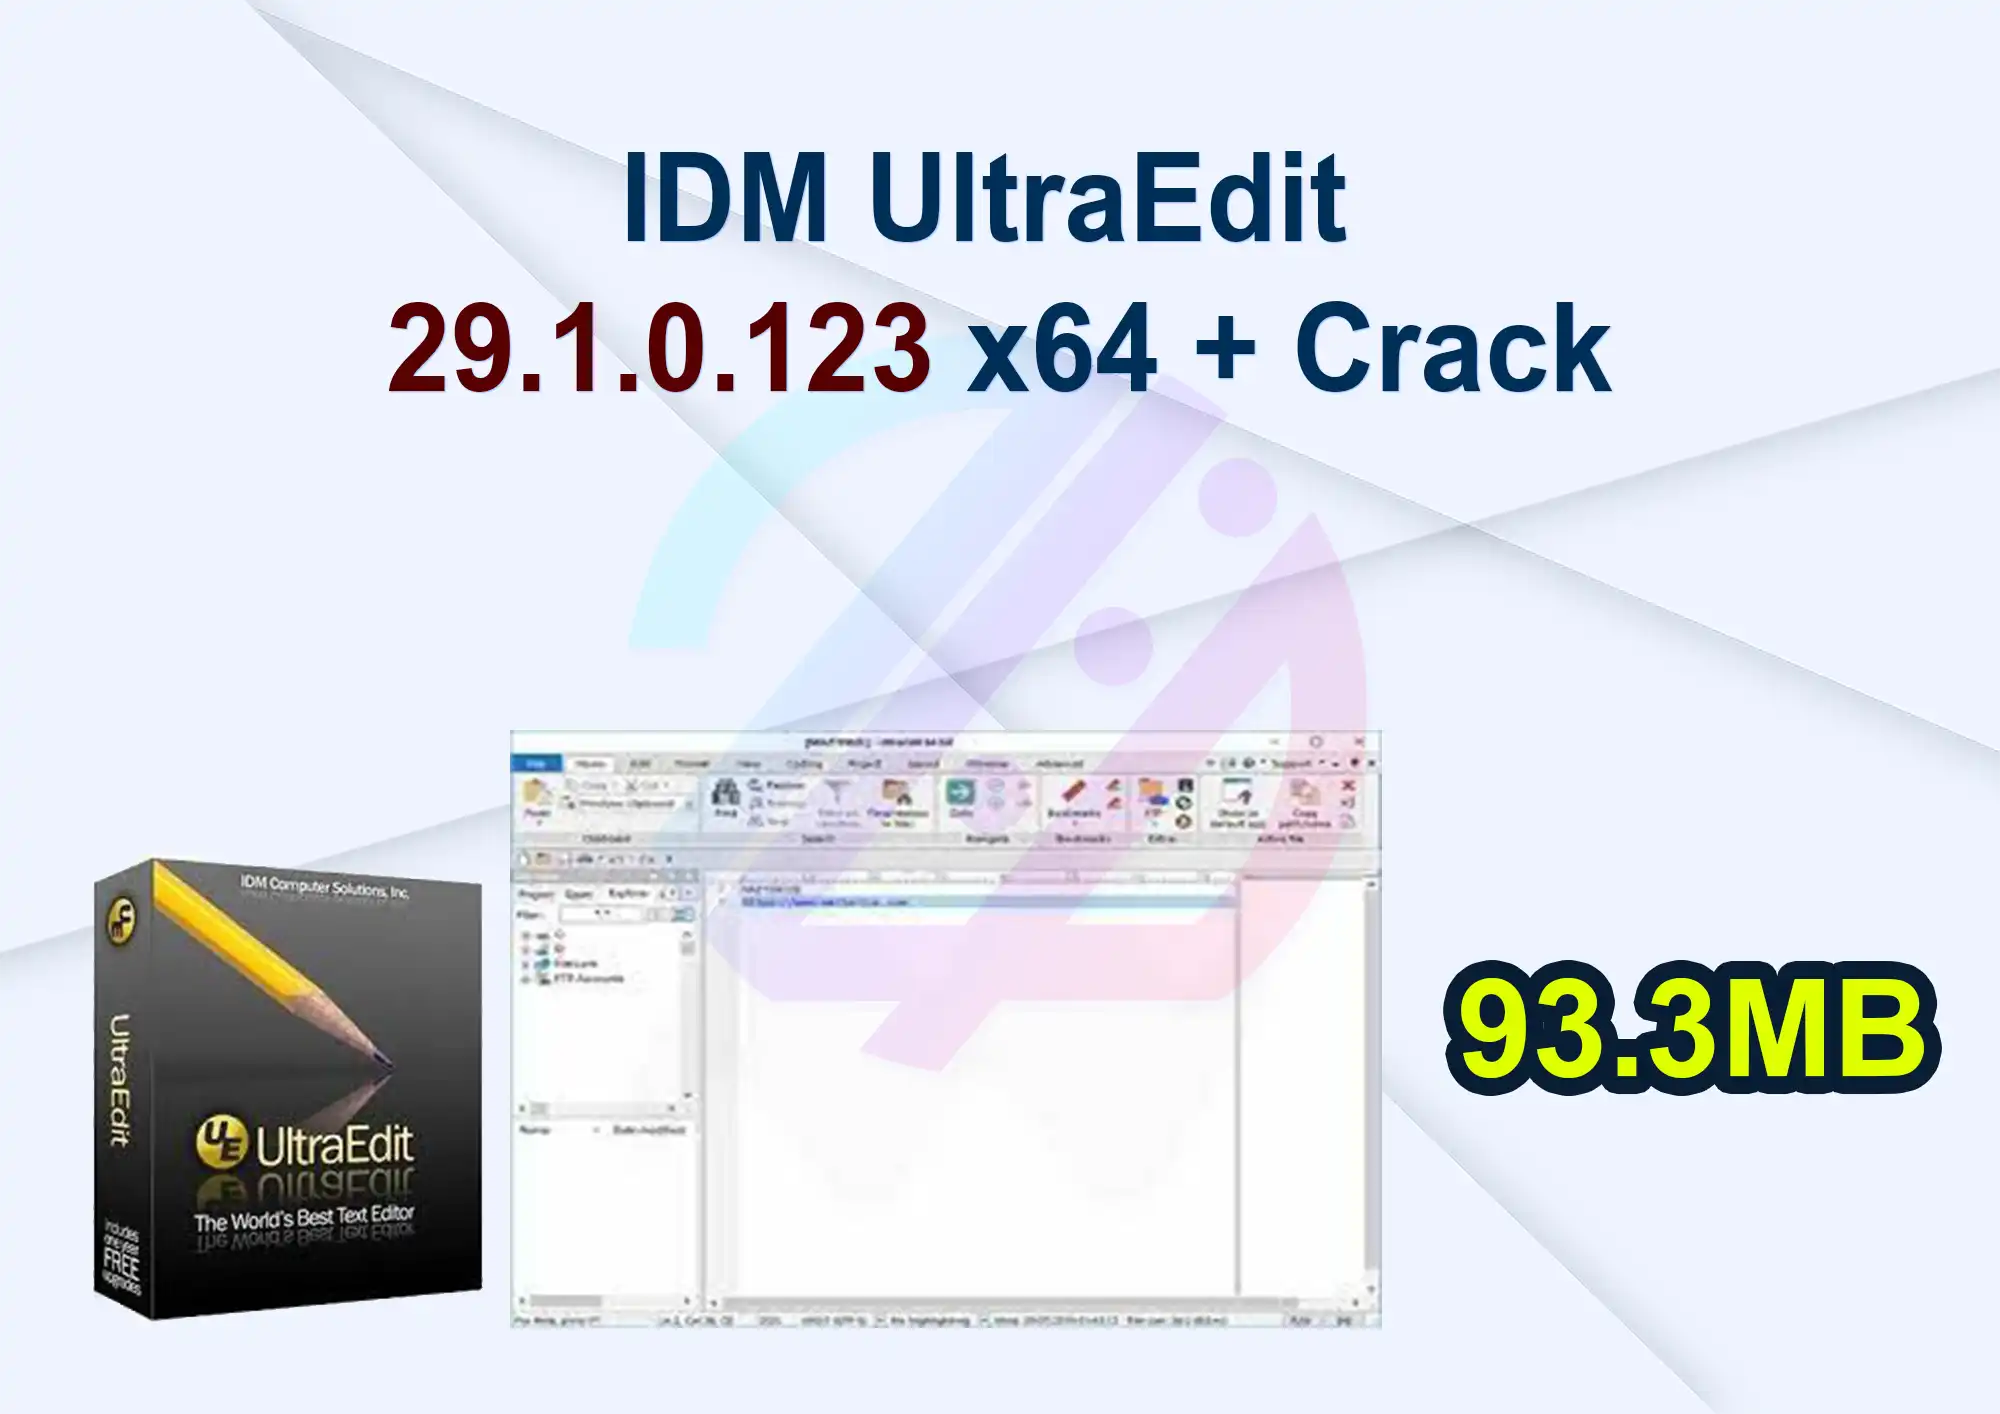 IDM UltraEdit 29.1.0.123 x64 + Crack